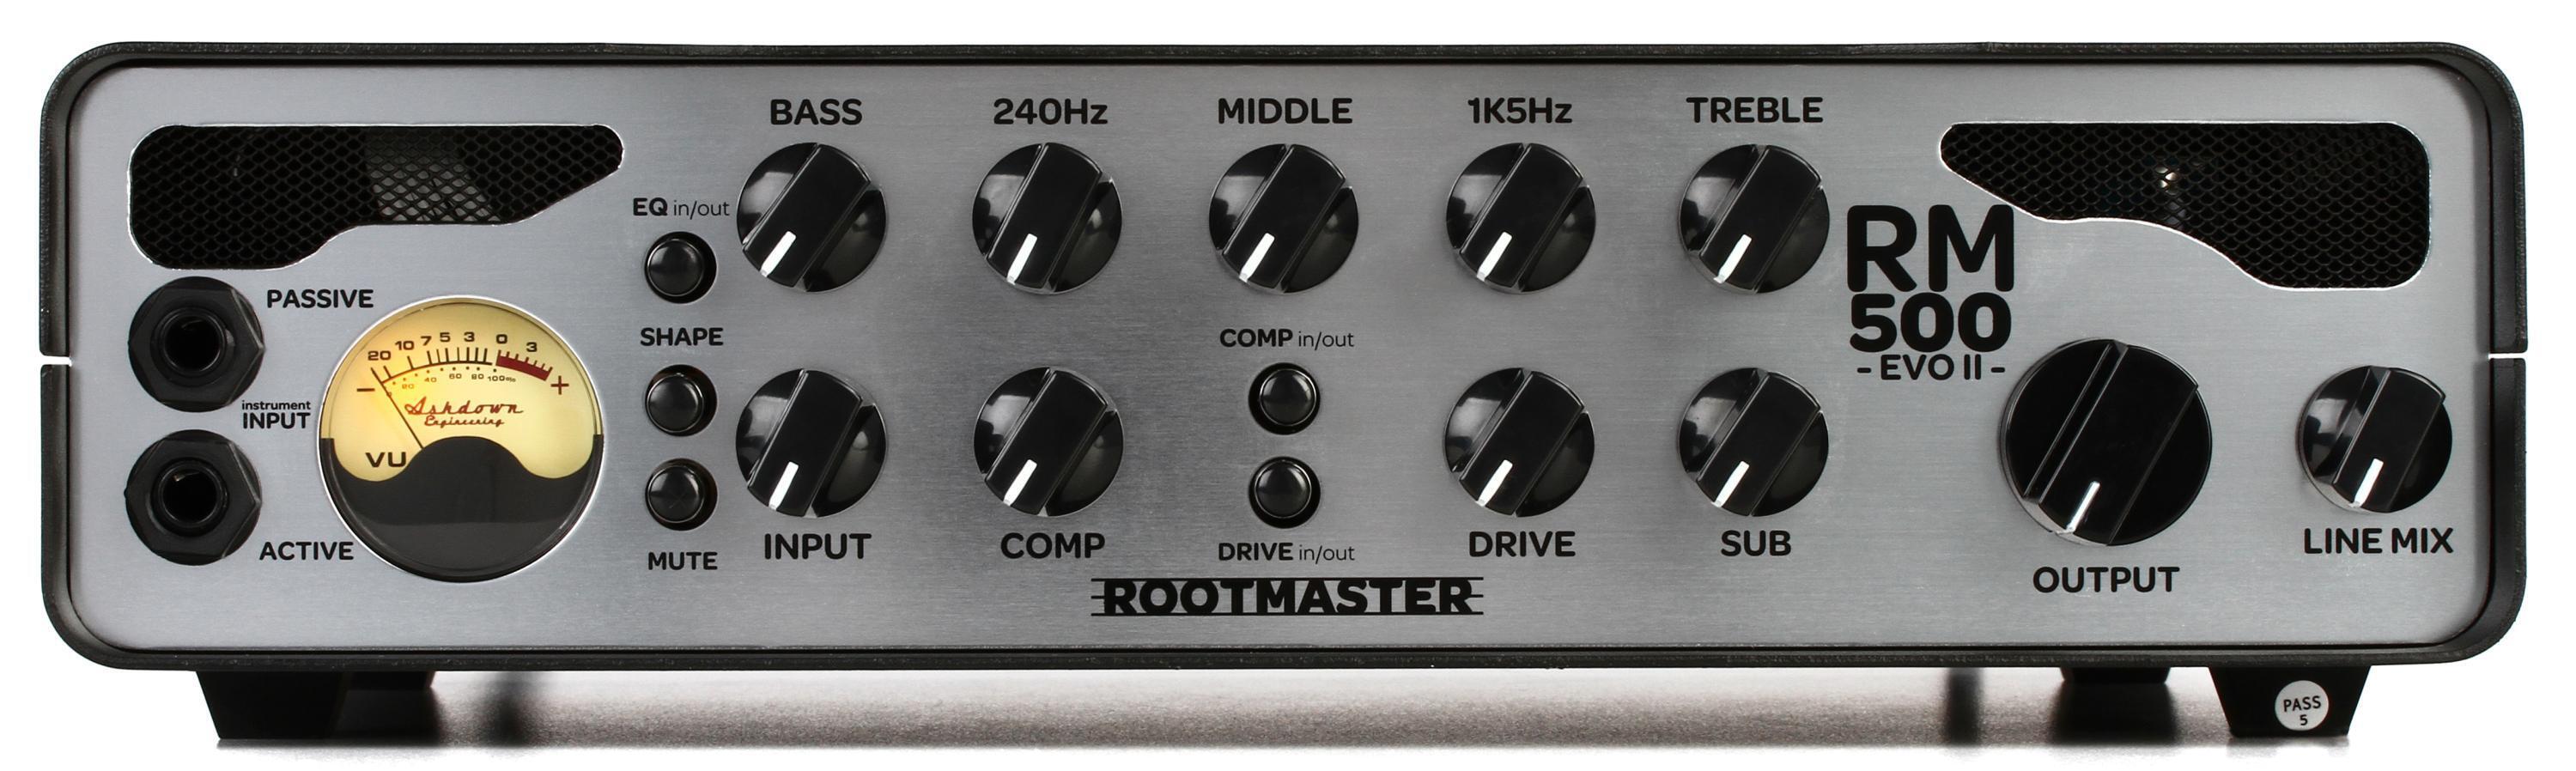 Head　Rootmaster　II　500-watt　Bass　Sweetwater　Ashdown　RM-500-EVO